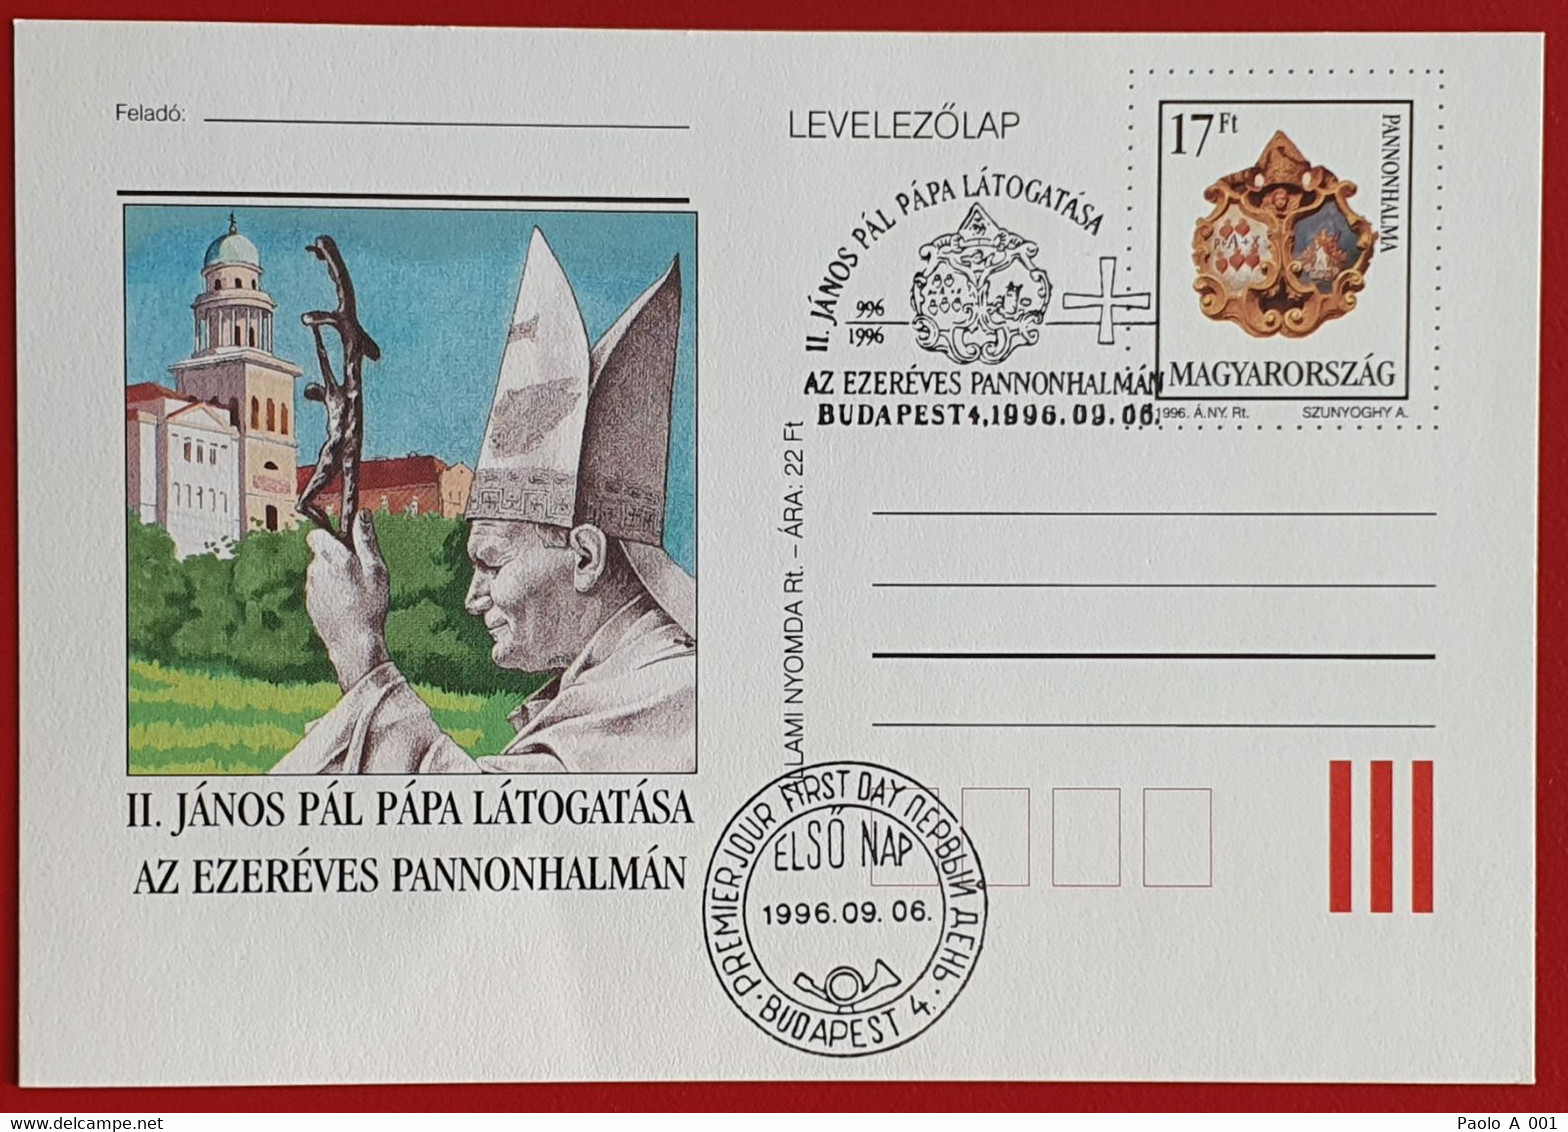 MAGYARORSZAG HUNGARY UNGARN 1996 EZEREVES PANNONHALMA BUDAPEST PAPAL VISIT LEVELEZÖLAP - Lettres & Documents